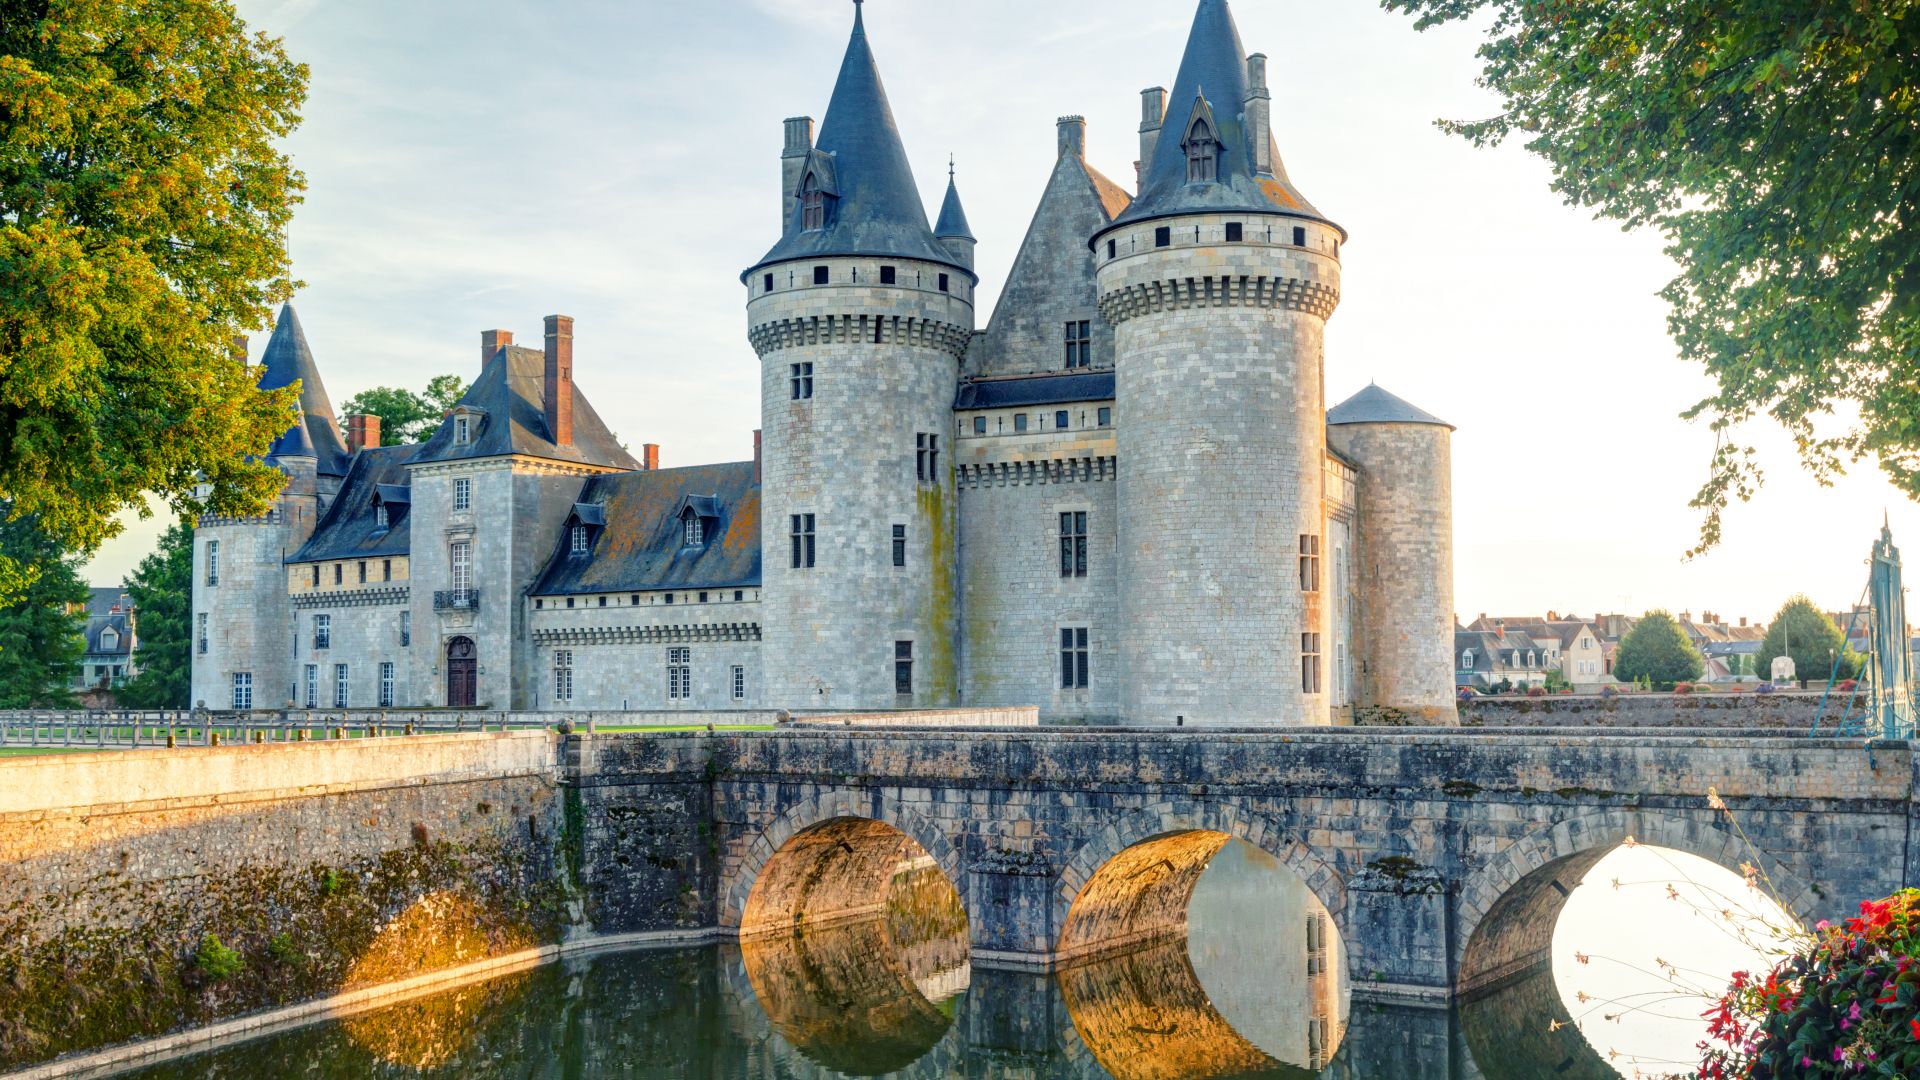 Шато де Сюлли-сюр-Луар, Франция, замок, путешествия, туризм, Chateau de sully-sur-loire, France, castle, travel, tourism (horizontal)